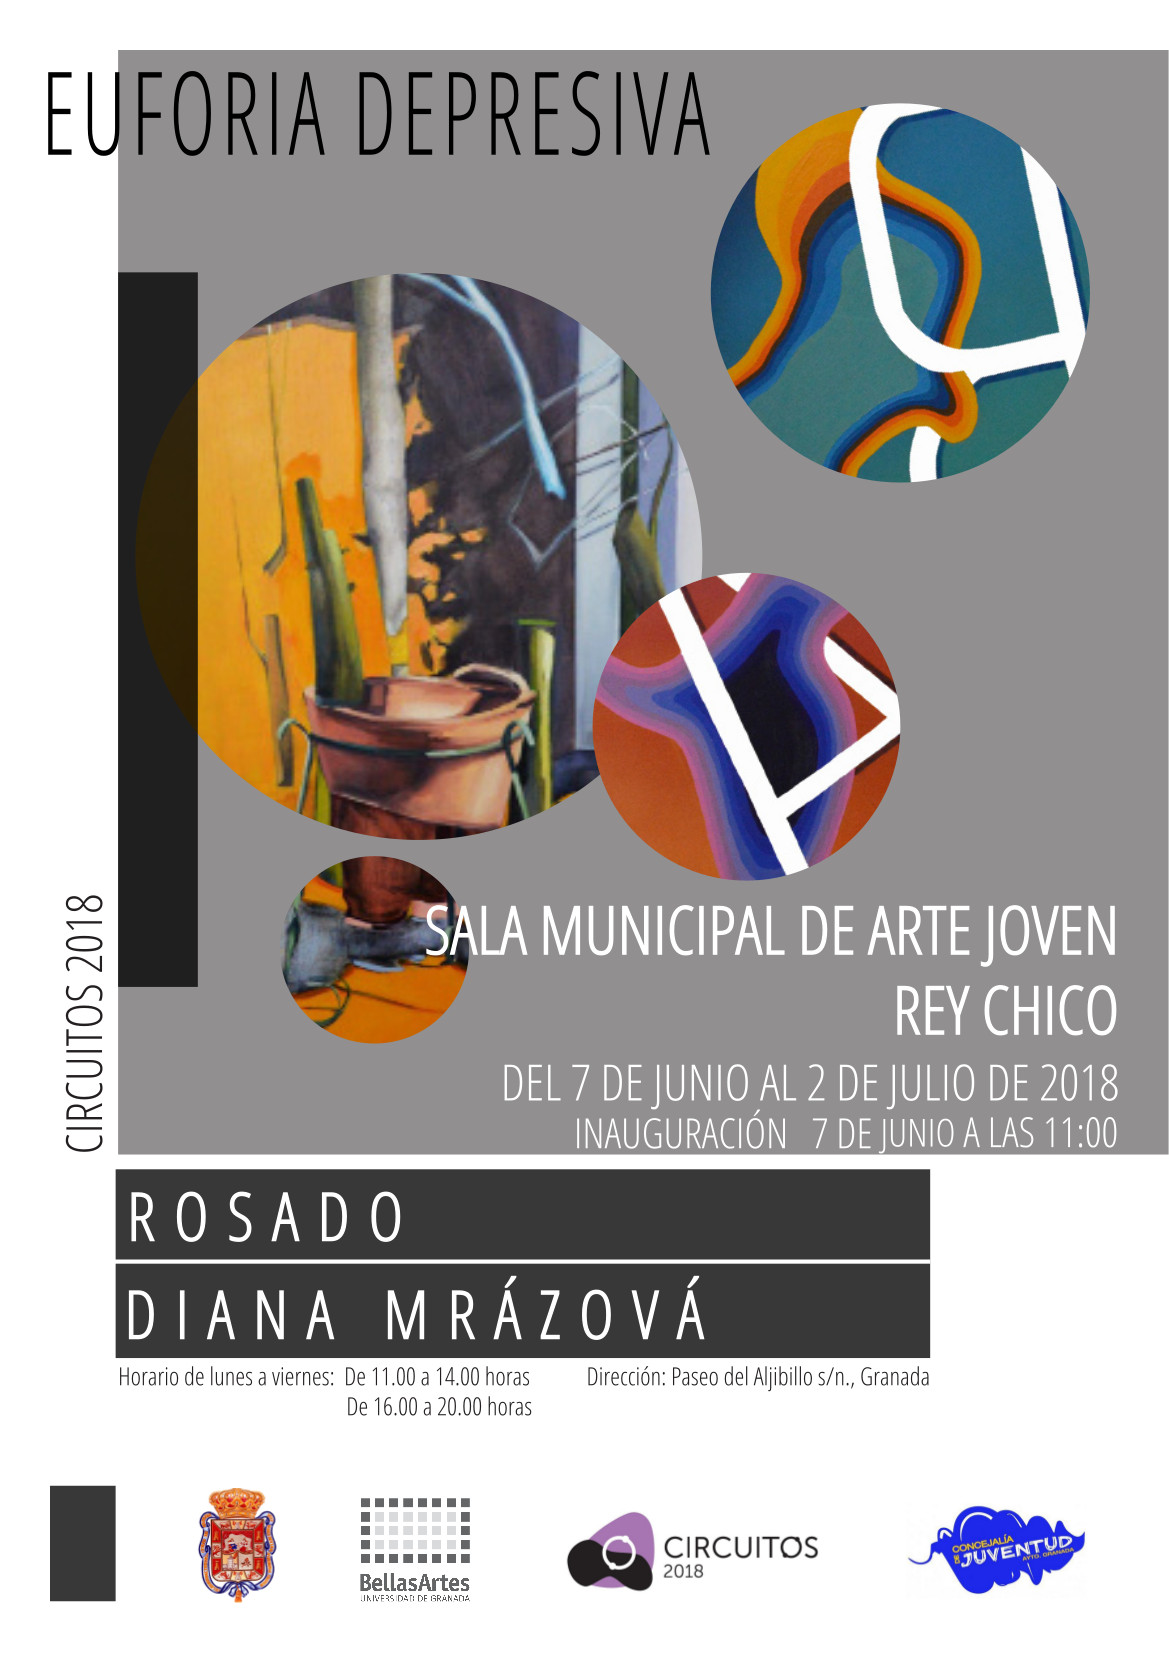 ©Ayto.Granada: Enredate: Euforia Depresiva por Rosado y Diana Mrzov